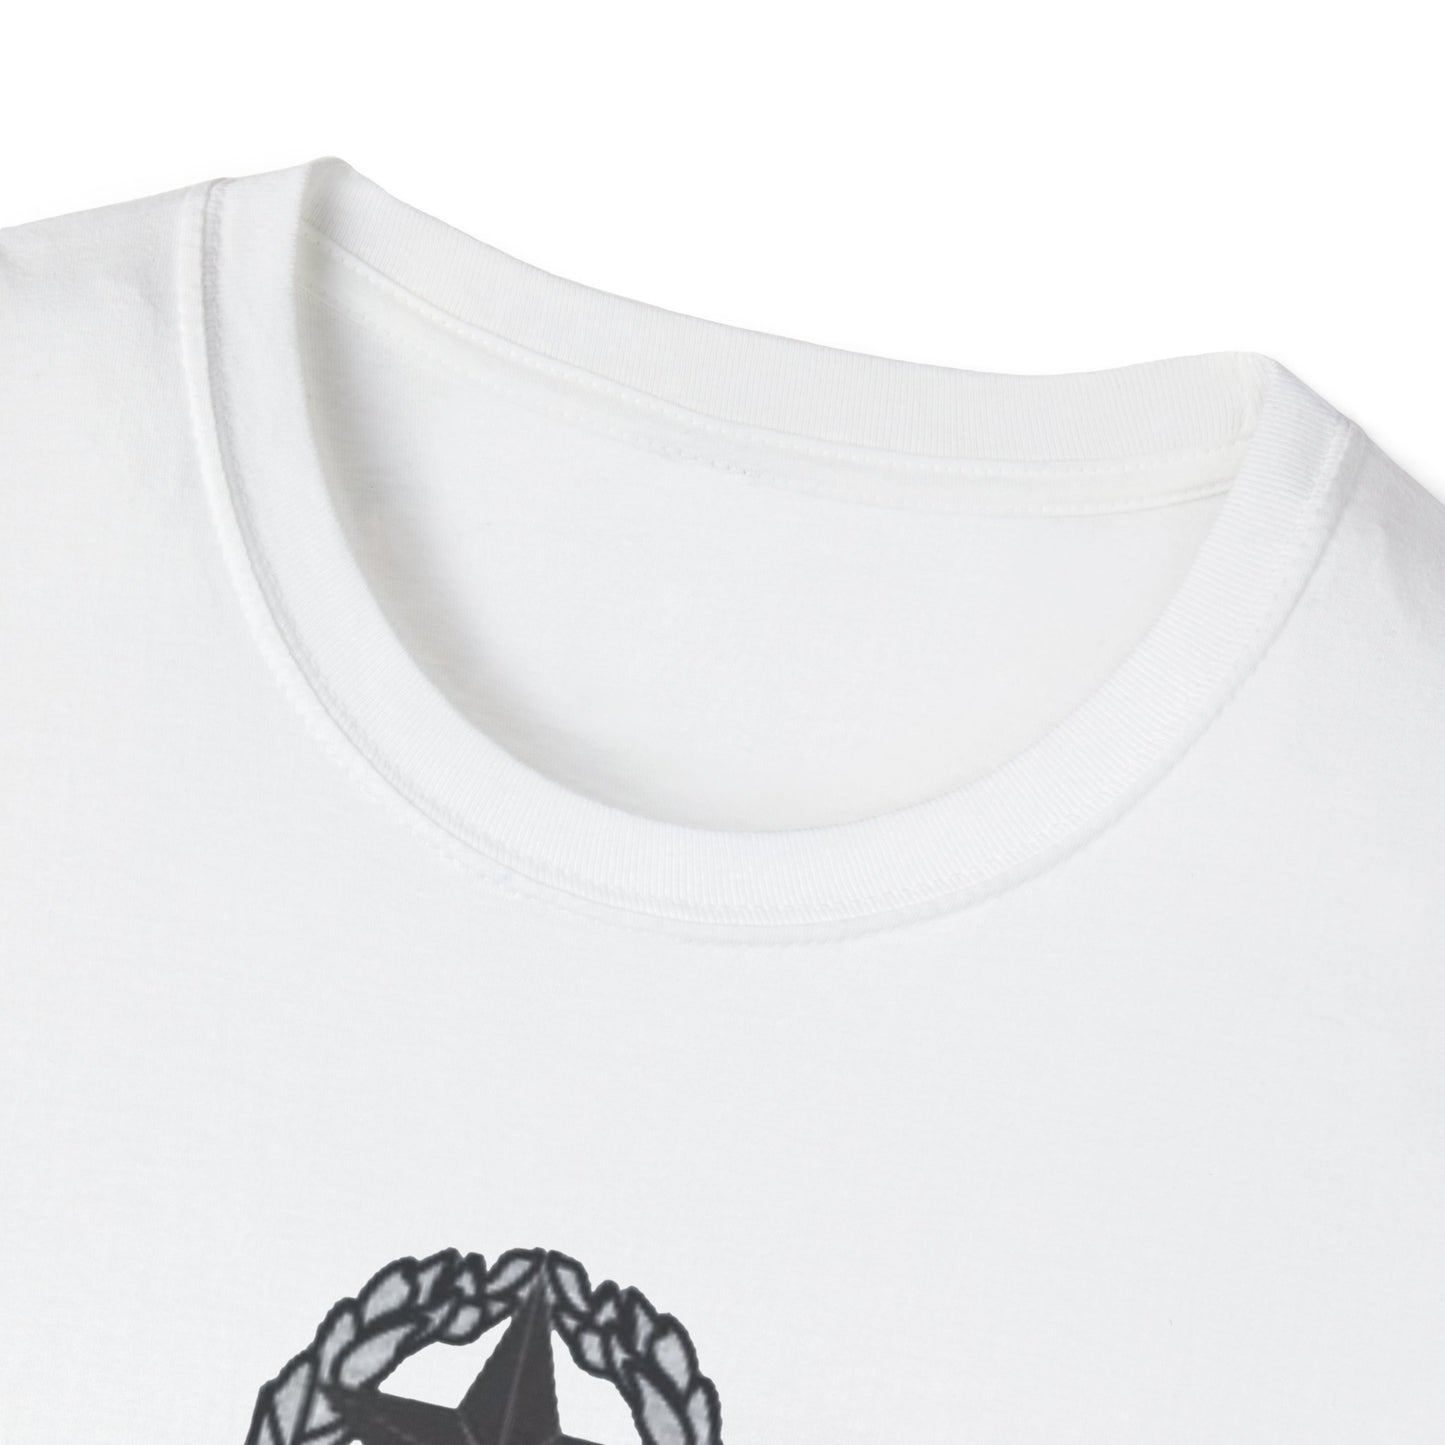 82nd Old School Logo Unisex Softstyle T-Shirt